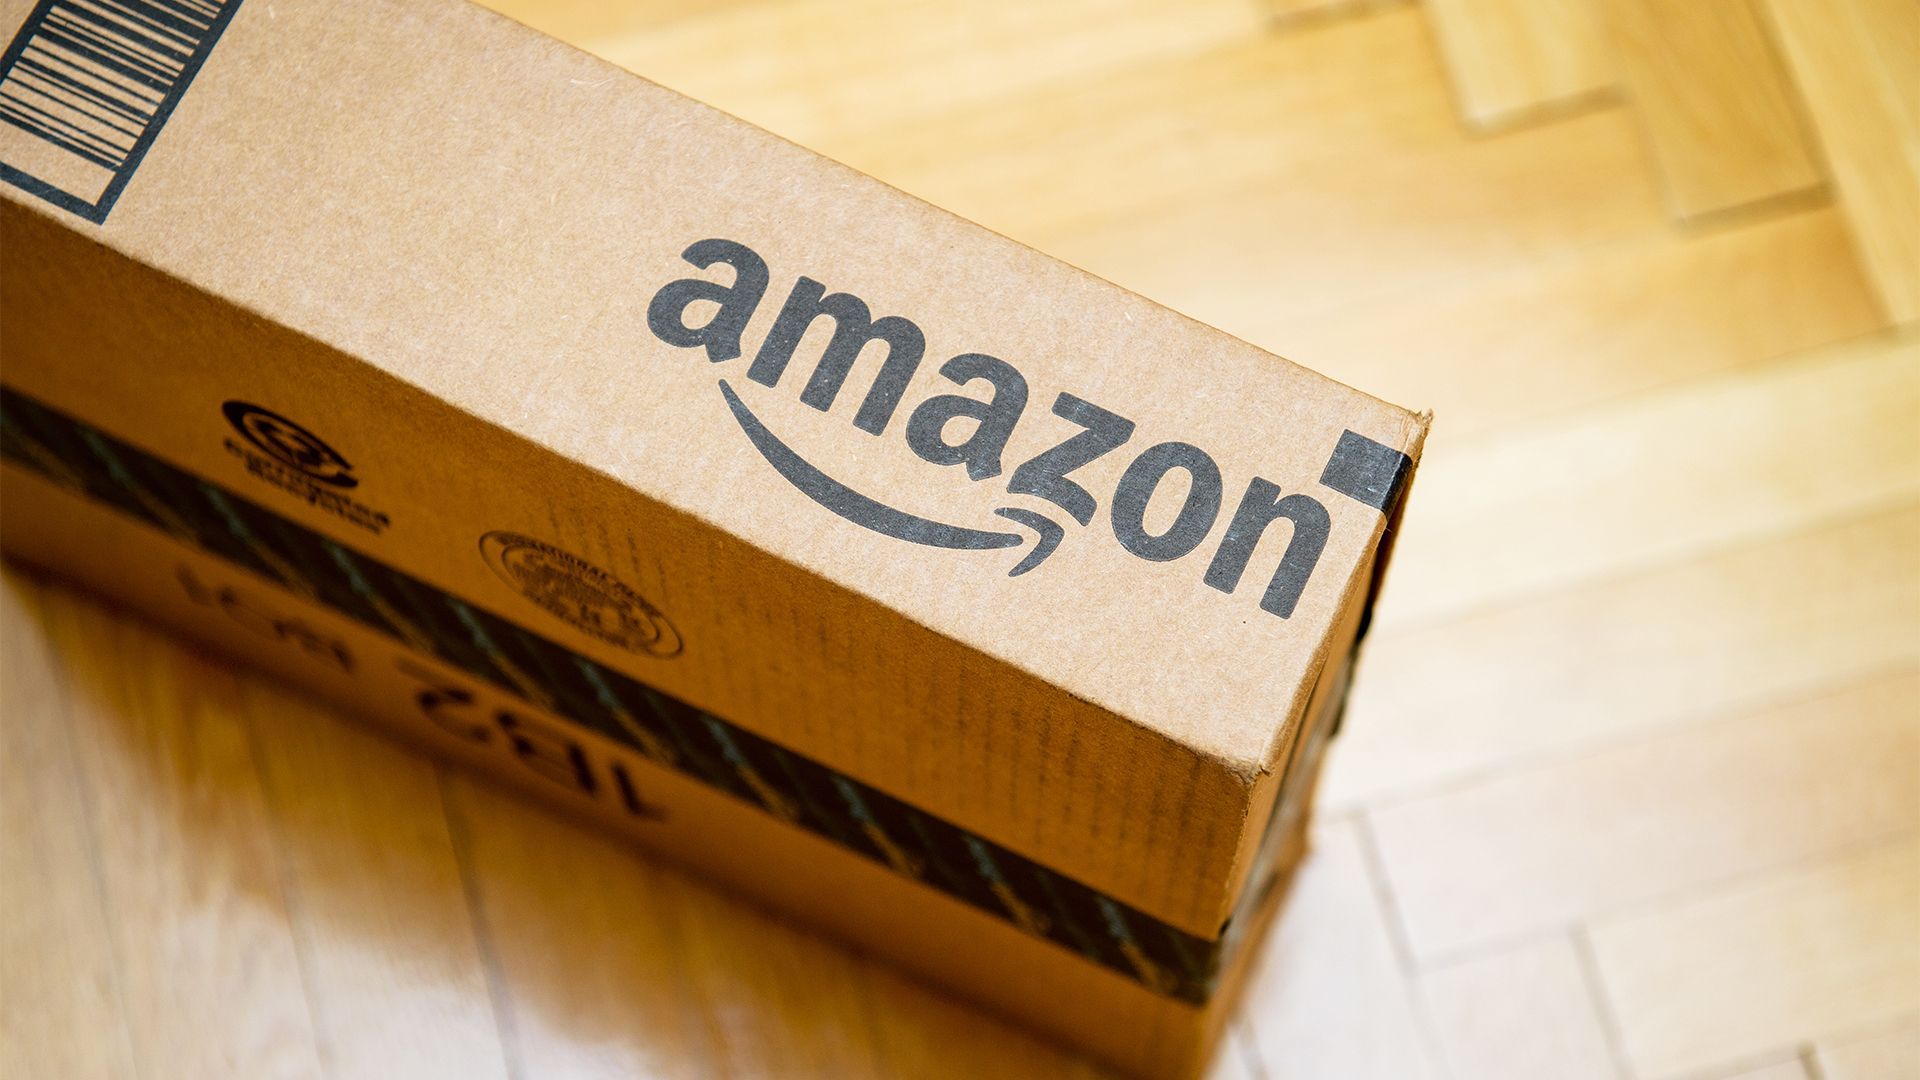 An Amazon box on a wooden floor.